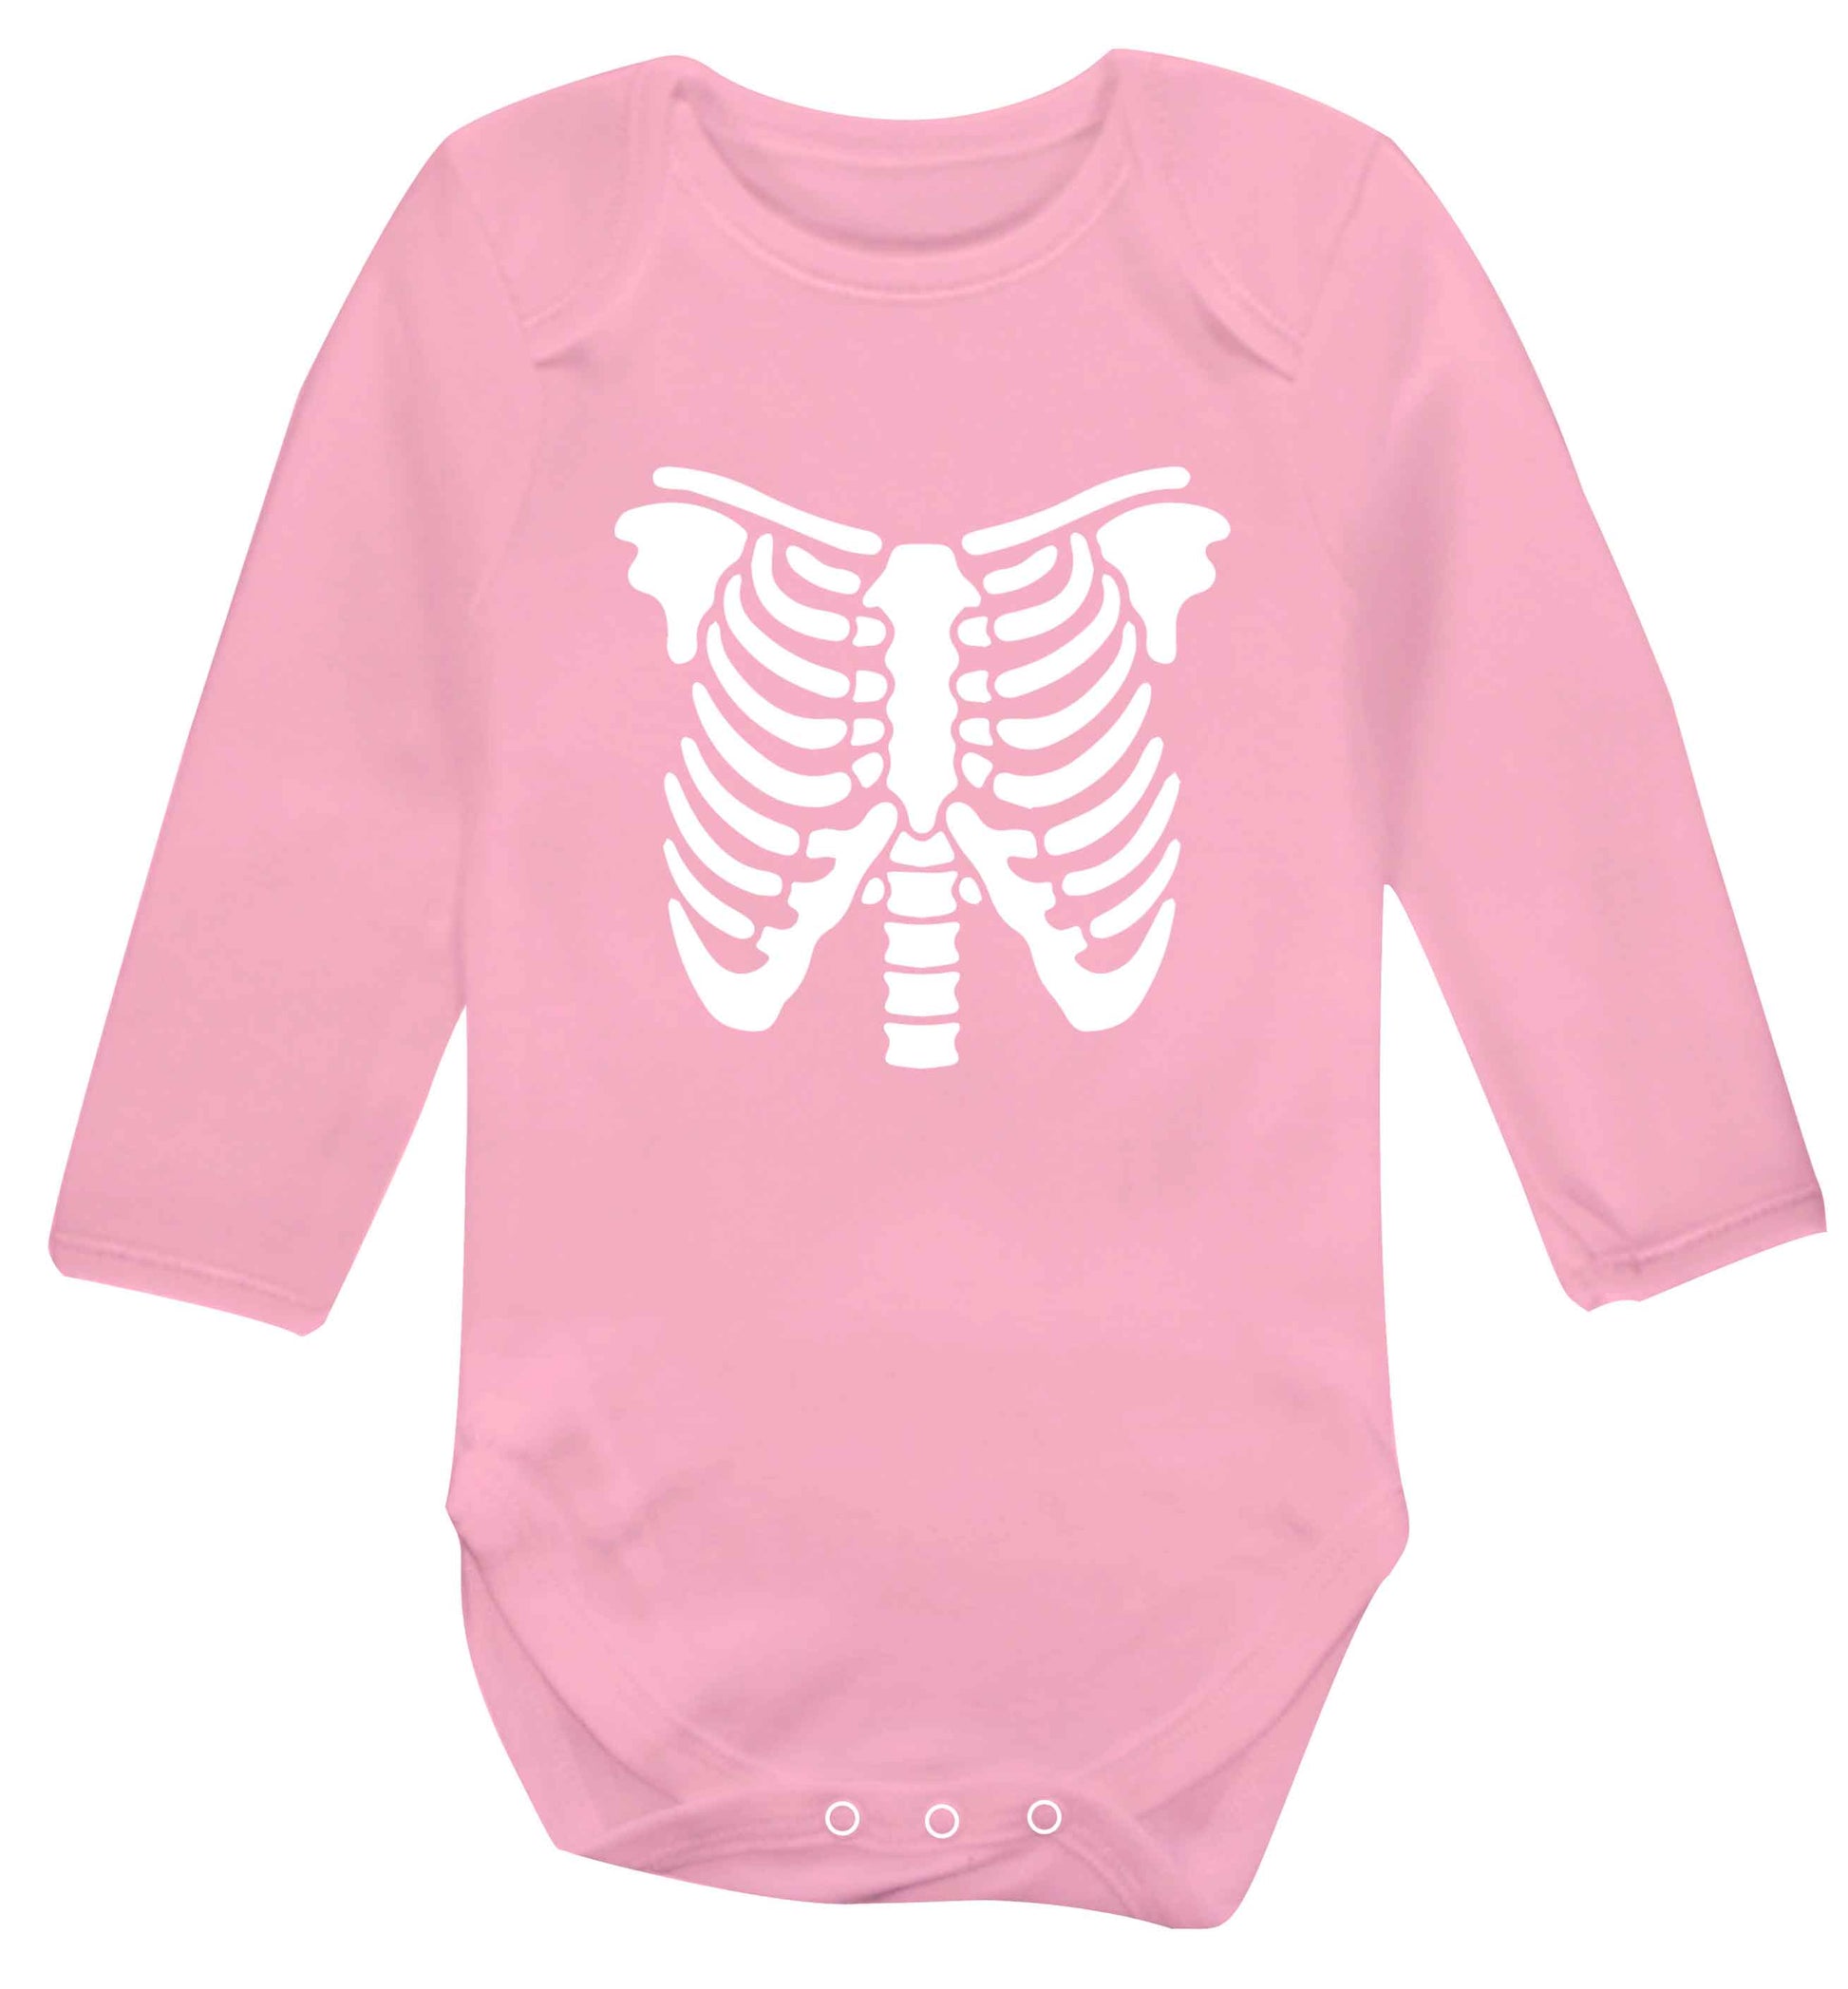 Skeleton ribcage baby vest long sleeved pale pink 6-12 months